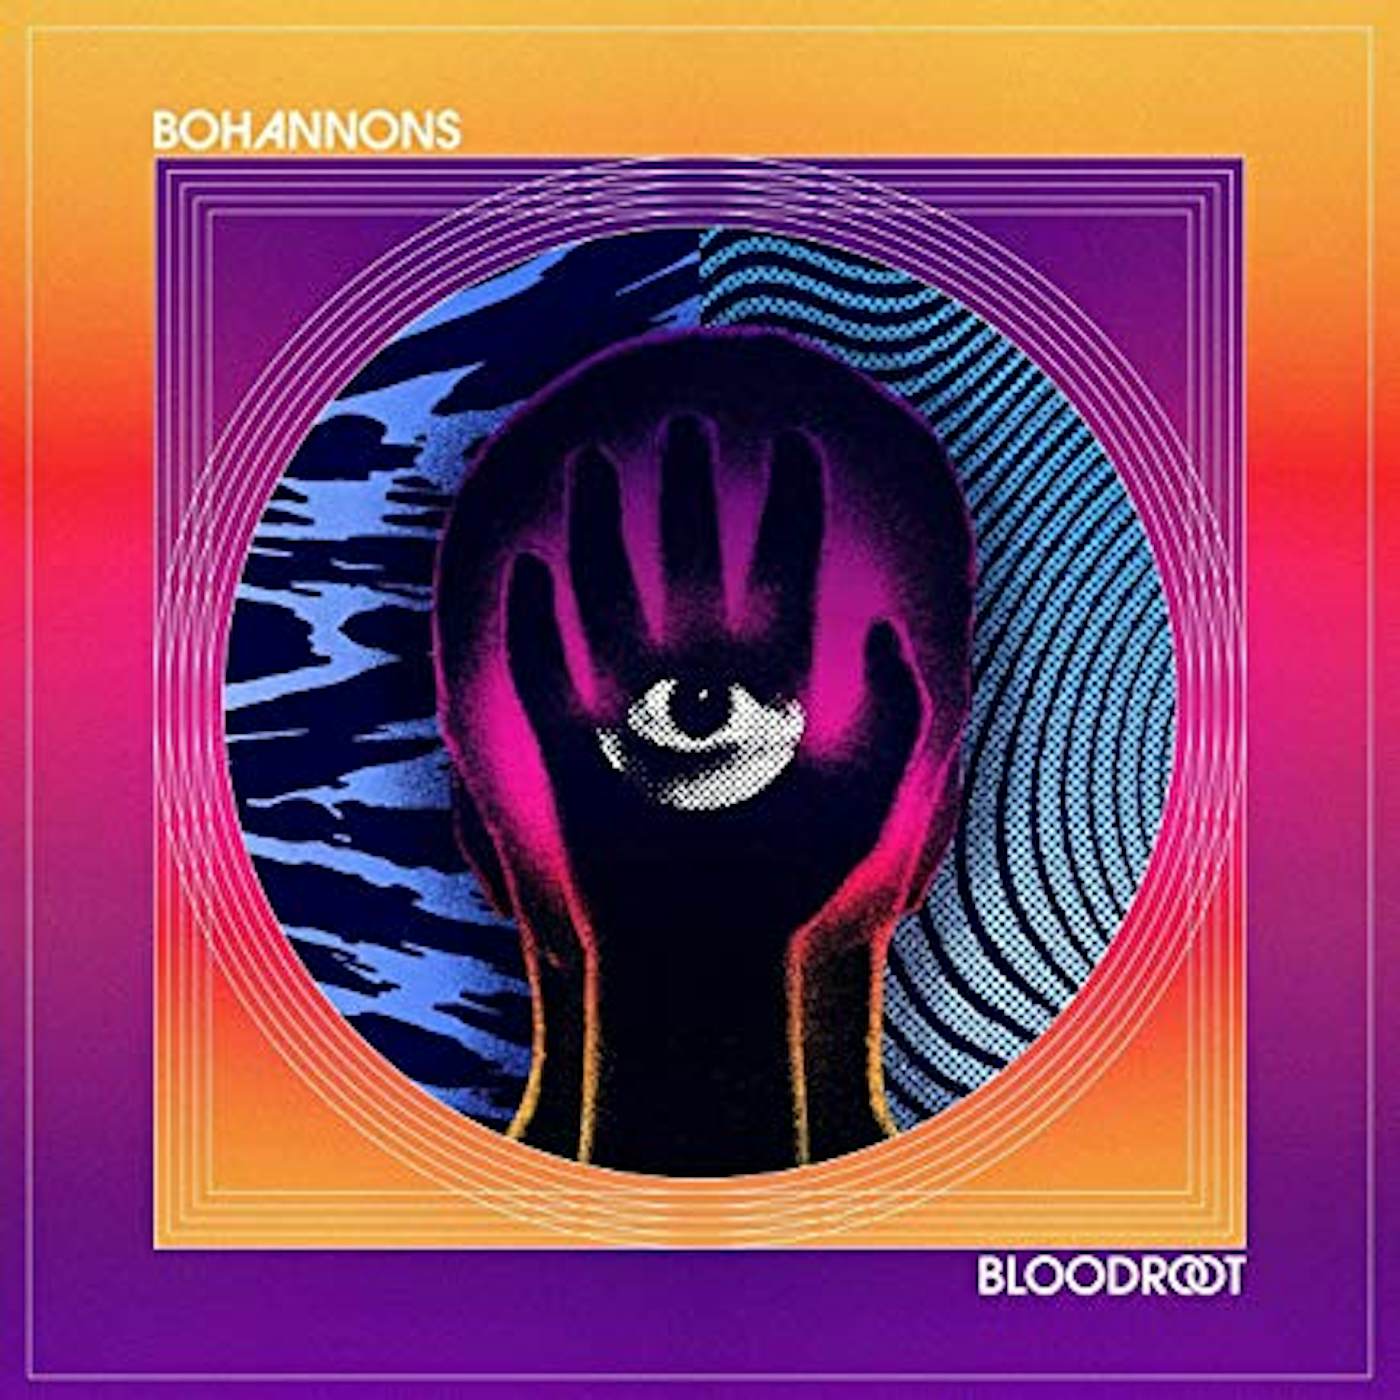 Bohannons BLOODROOT CD